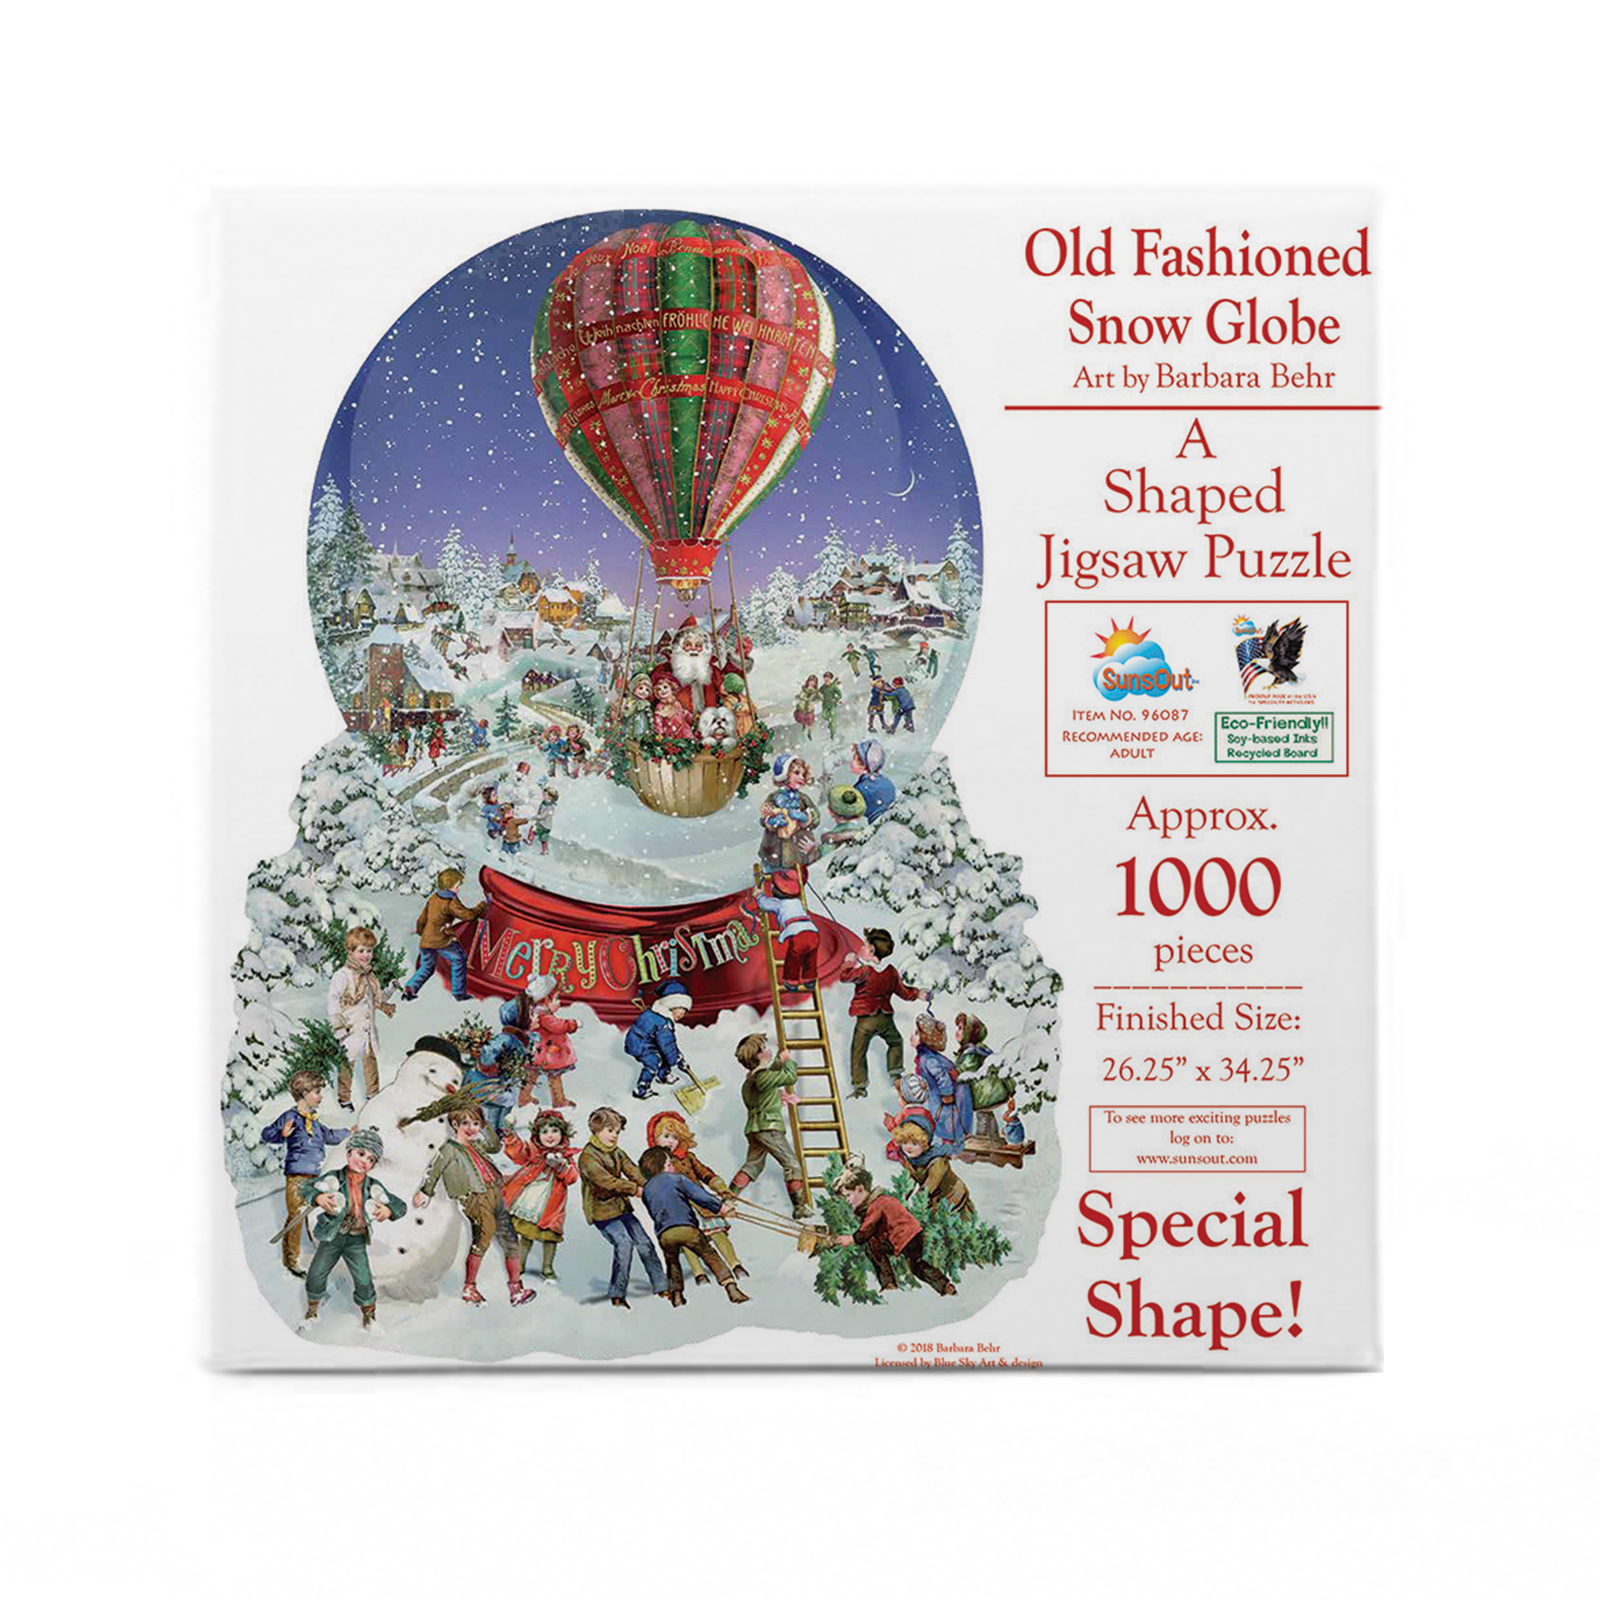 Old Fashioned Snow Globe